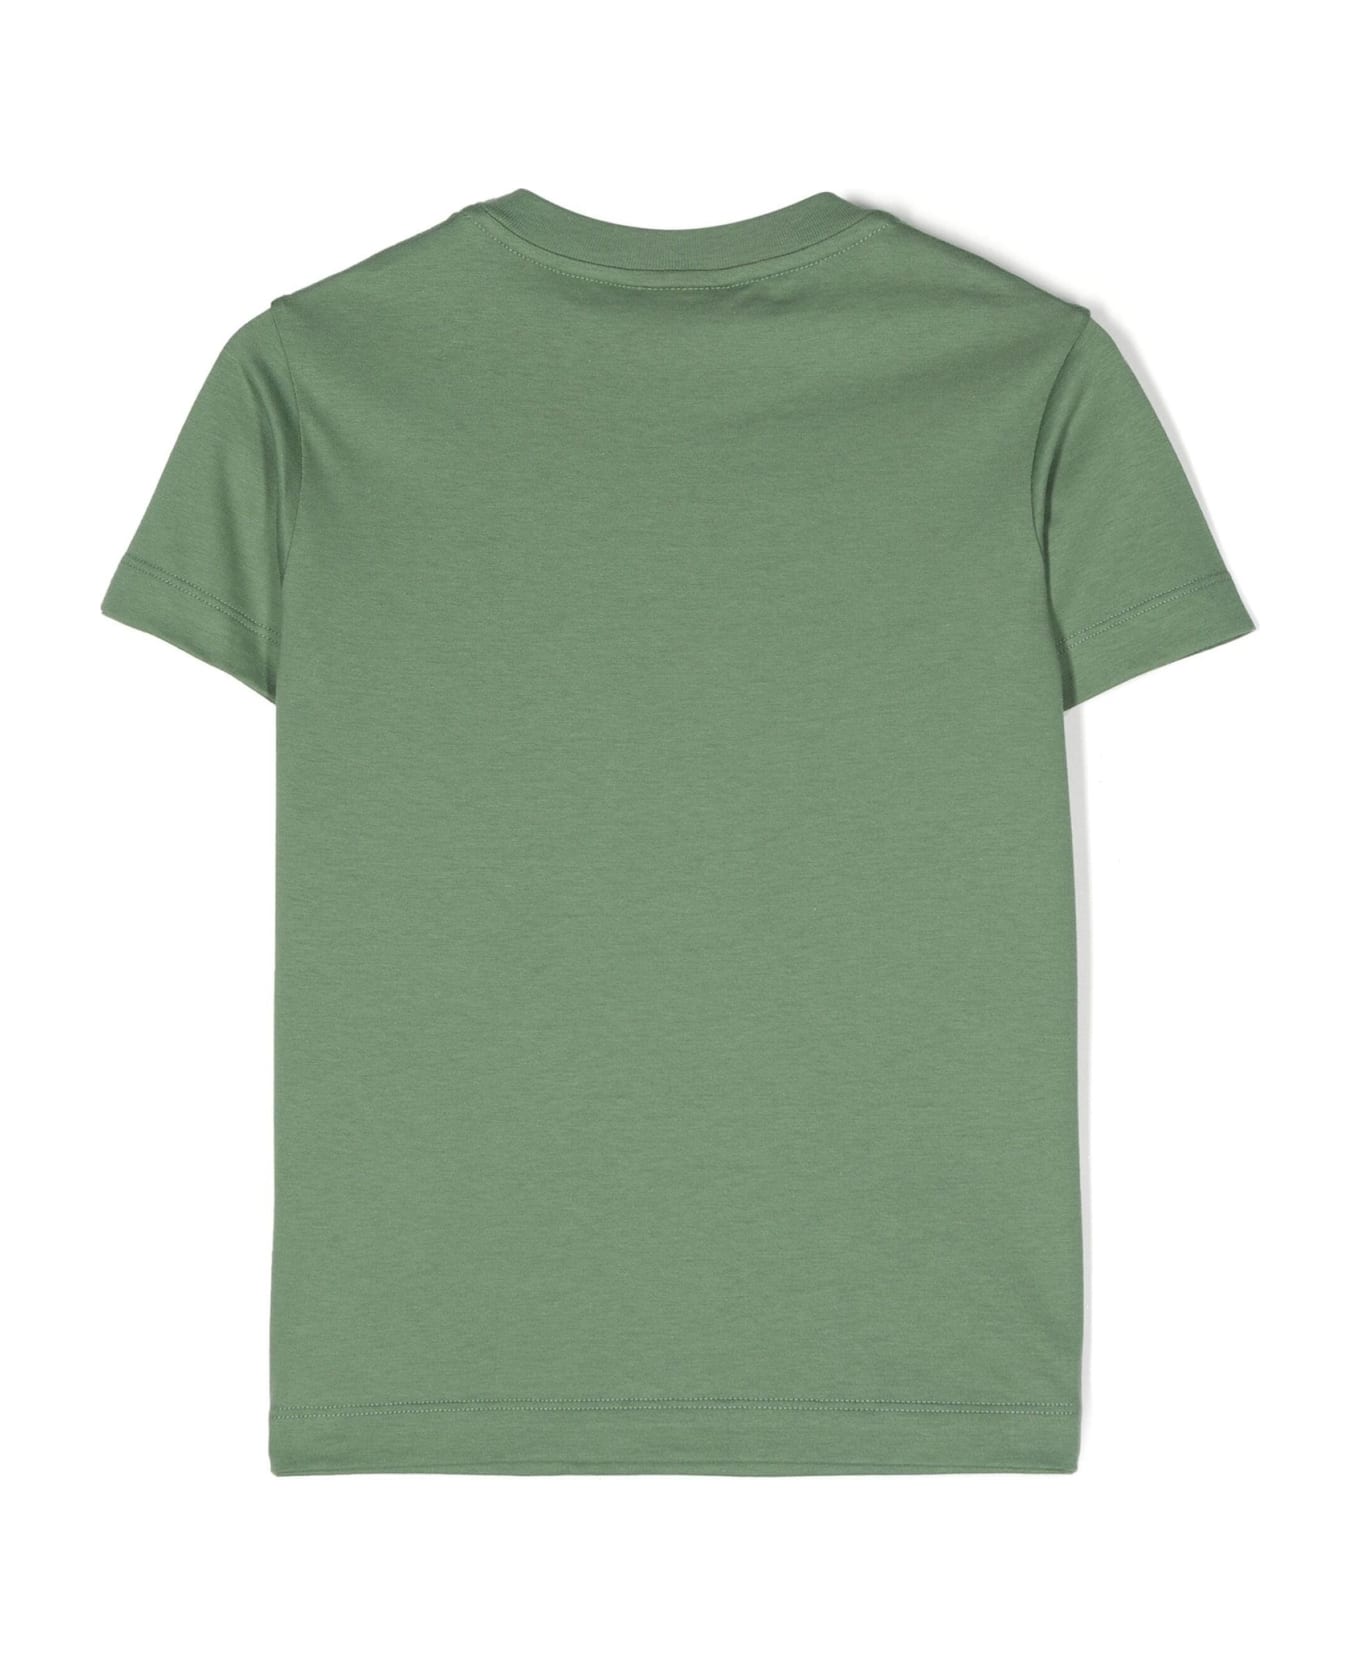 Fendi Kids T-shirts And Polos Green - Green